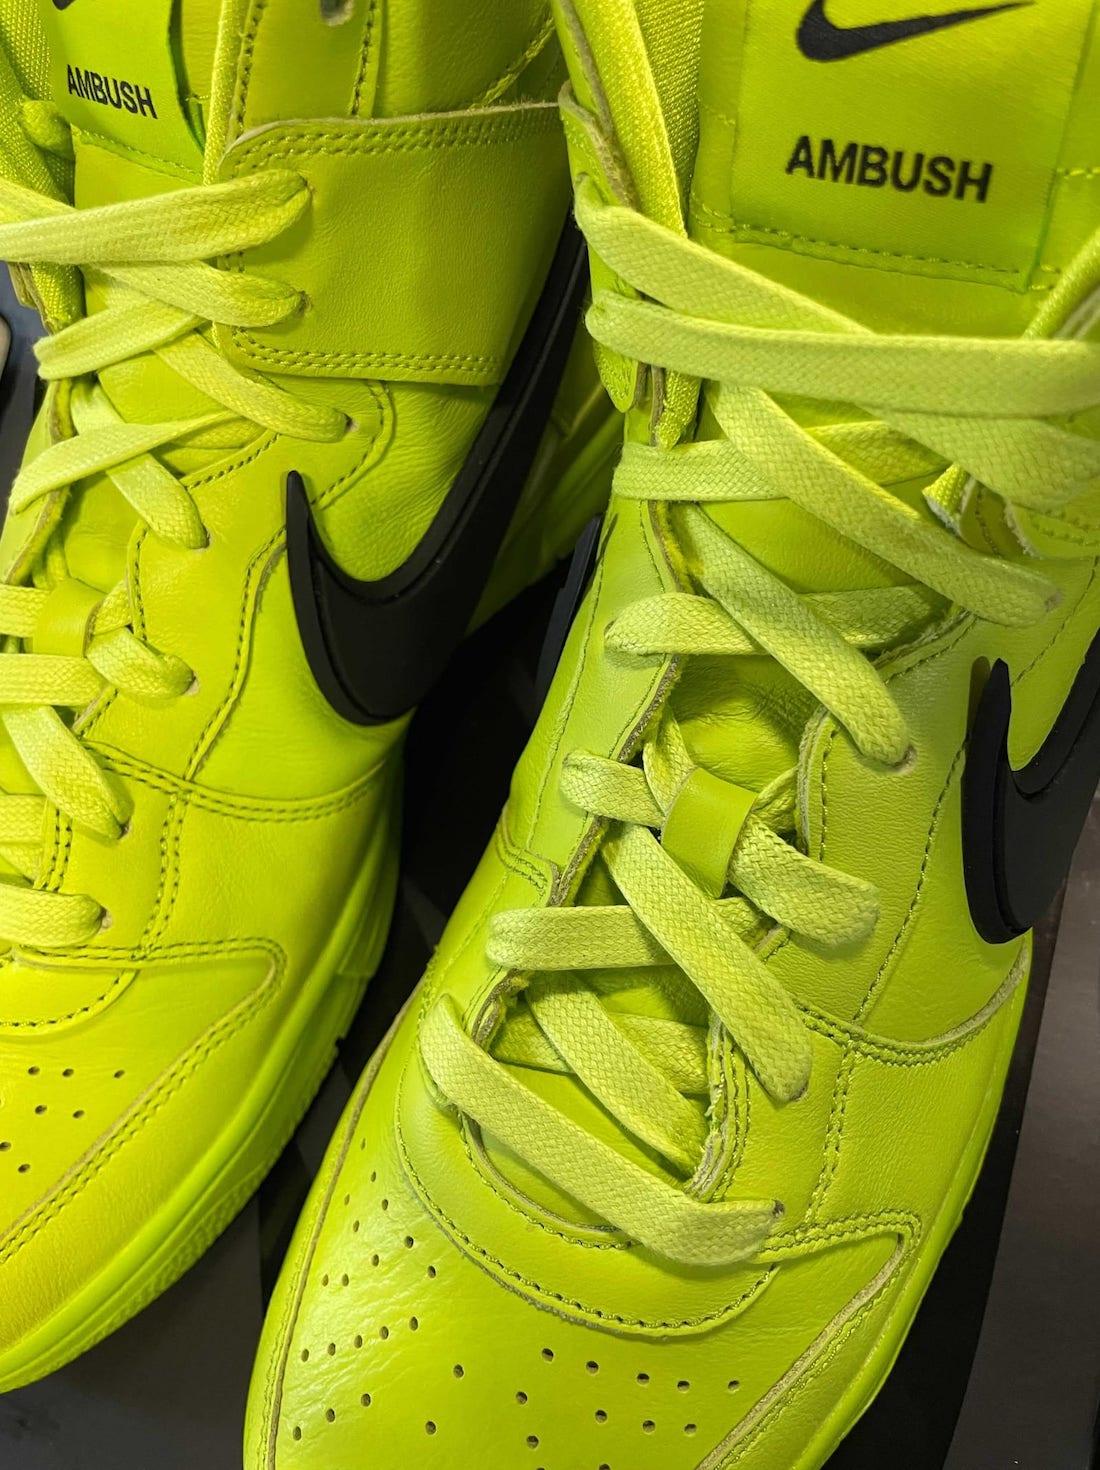 Ambush x Nike Dunk High “Atomic Green”